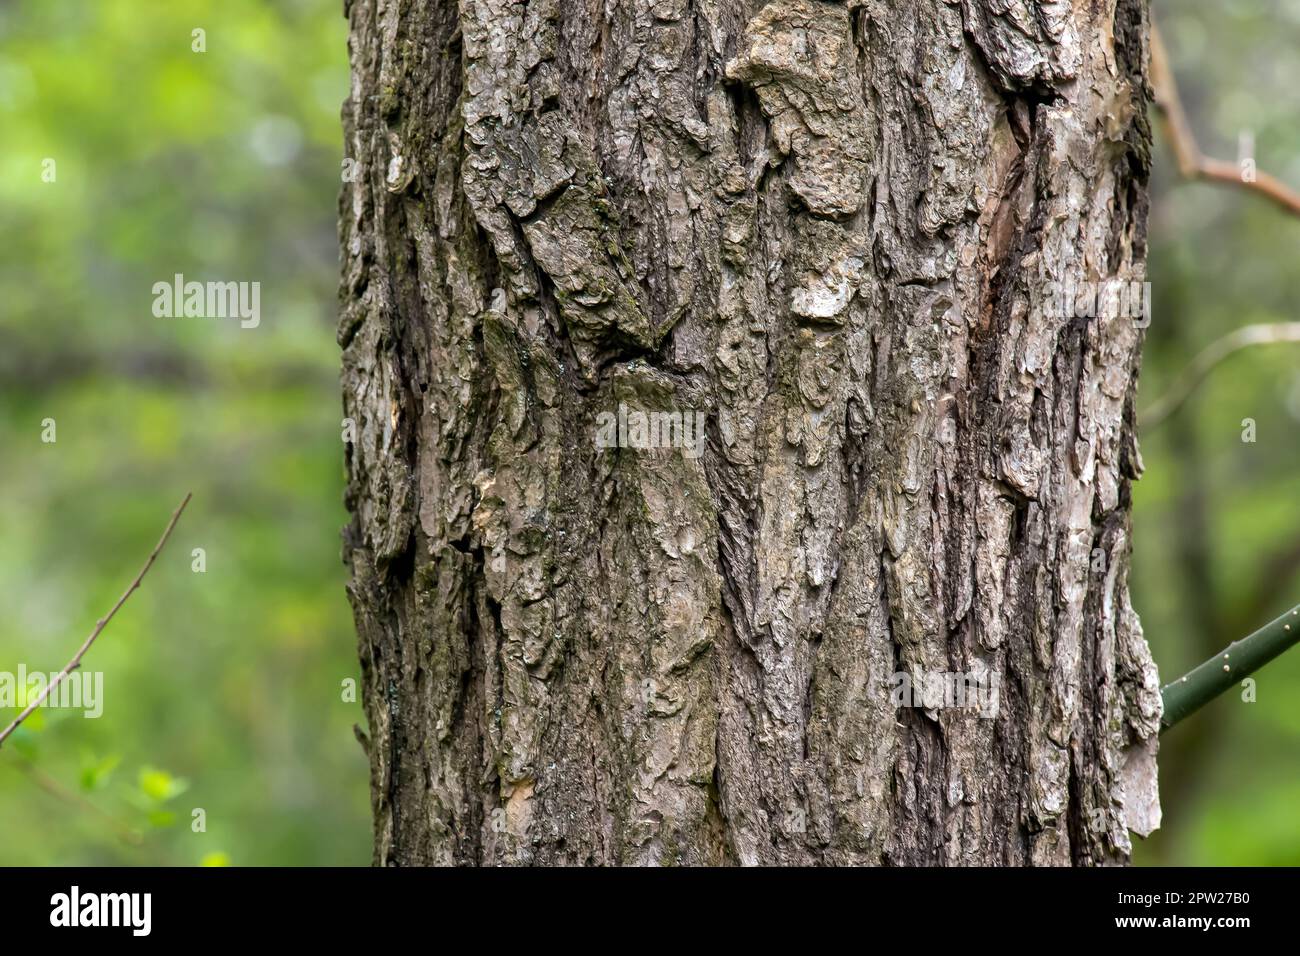 Background of Sophora bark. Detail of the bark of Sophora - Latin name - Sophora japonica pendula. Stock Photo